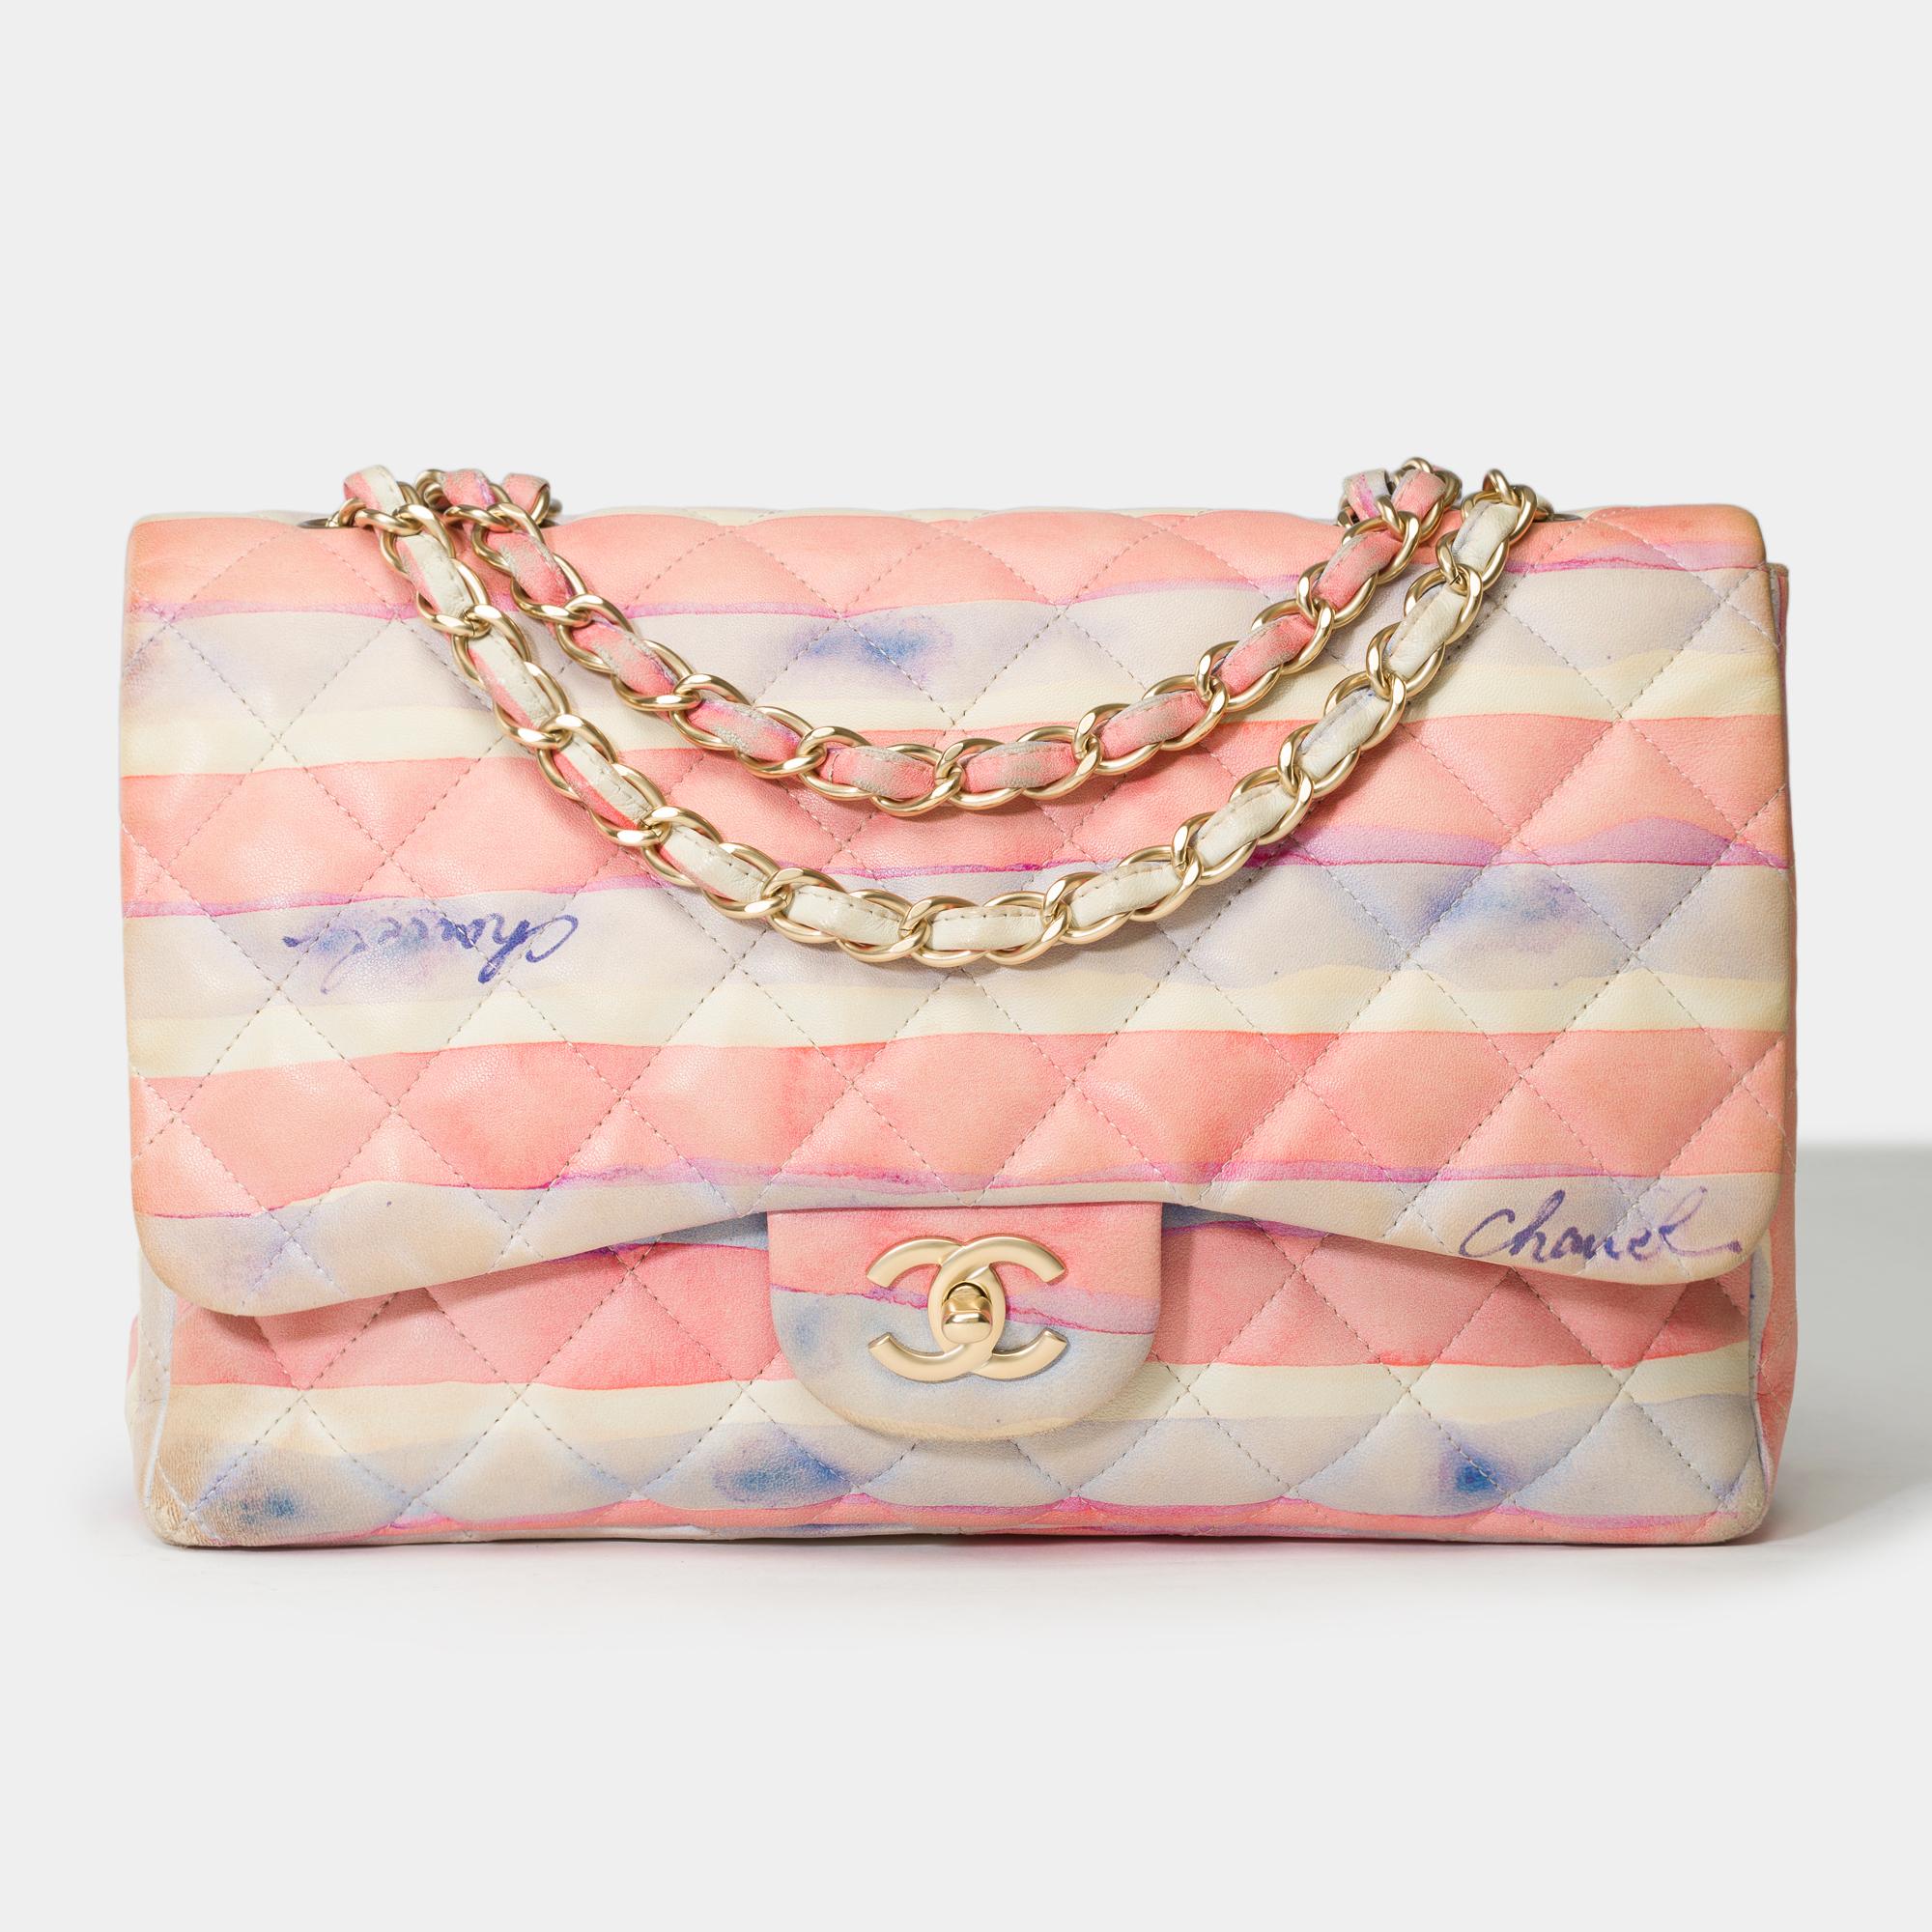 Splendide et rare sac Chanel Intemporel/Classique 